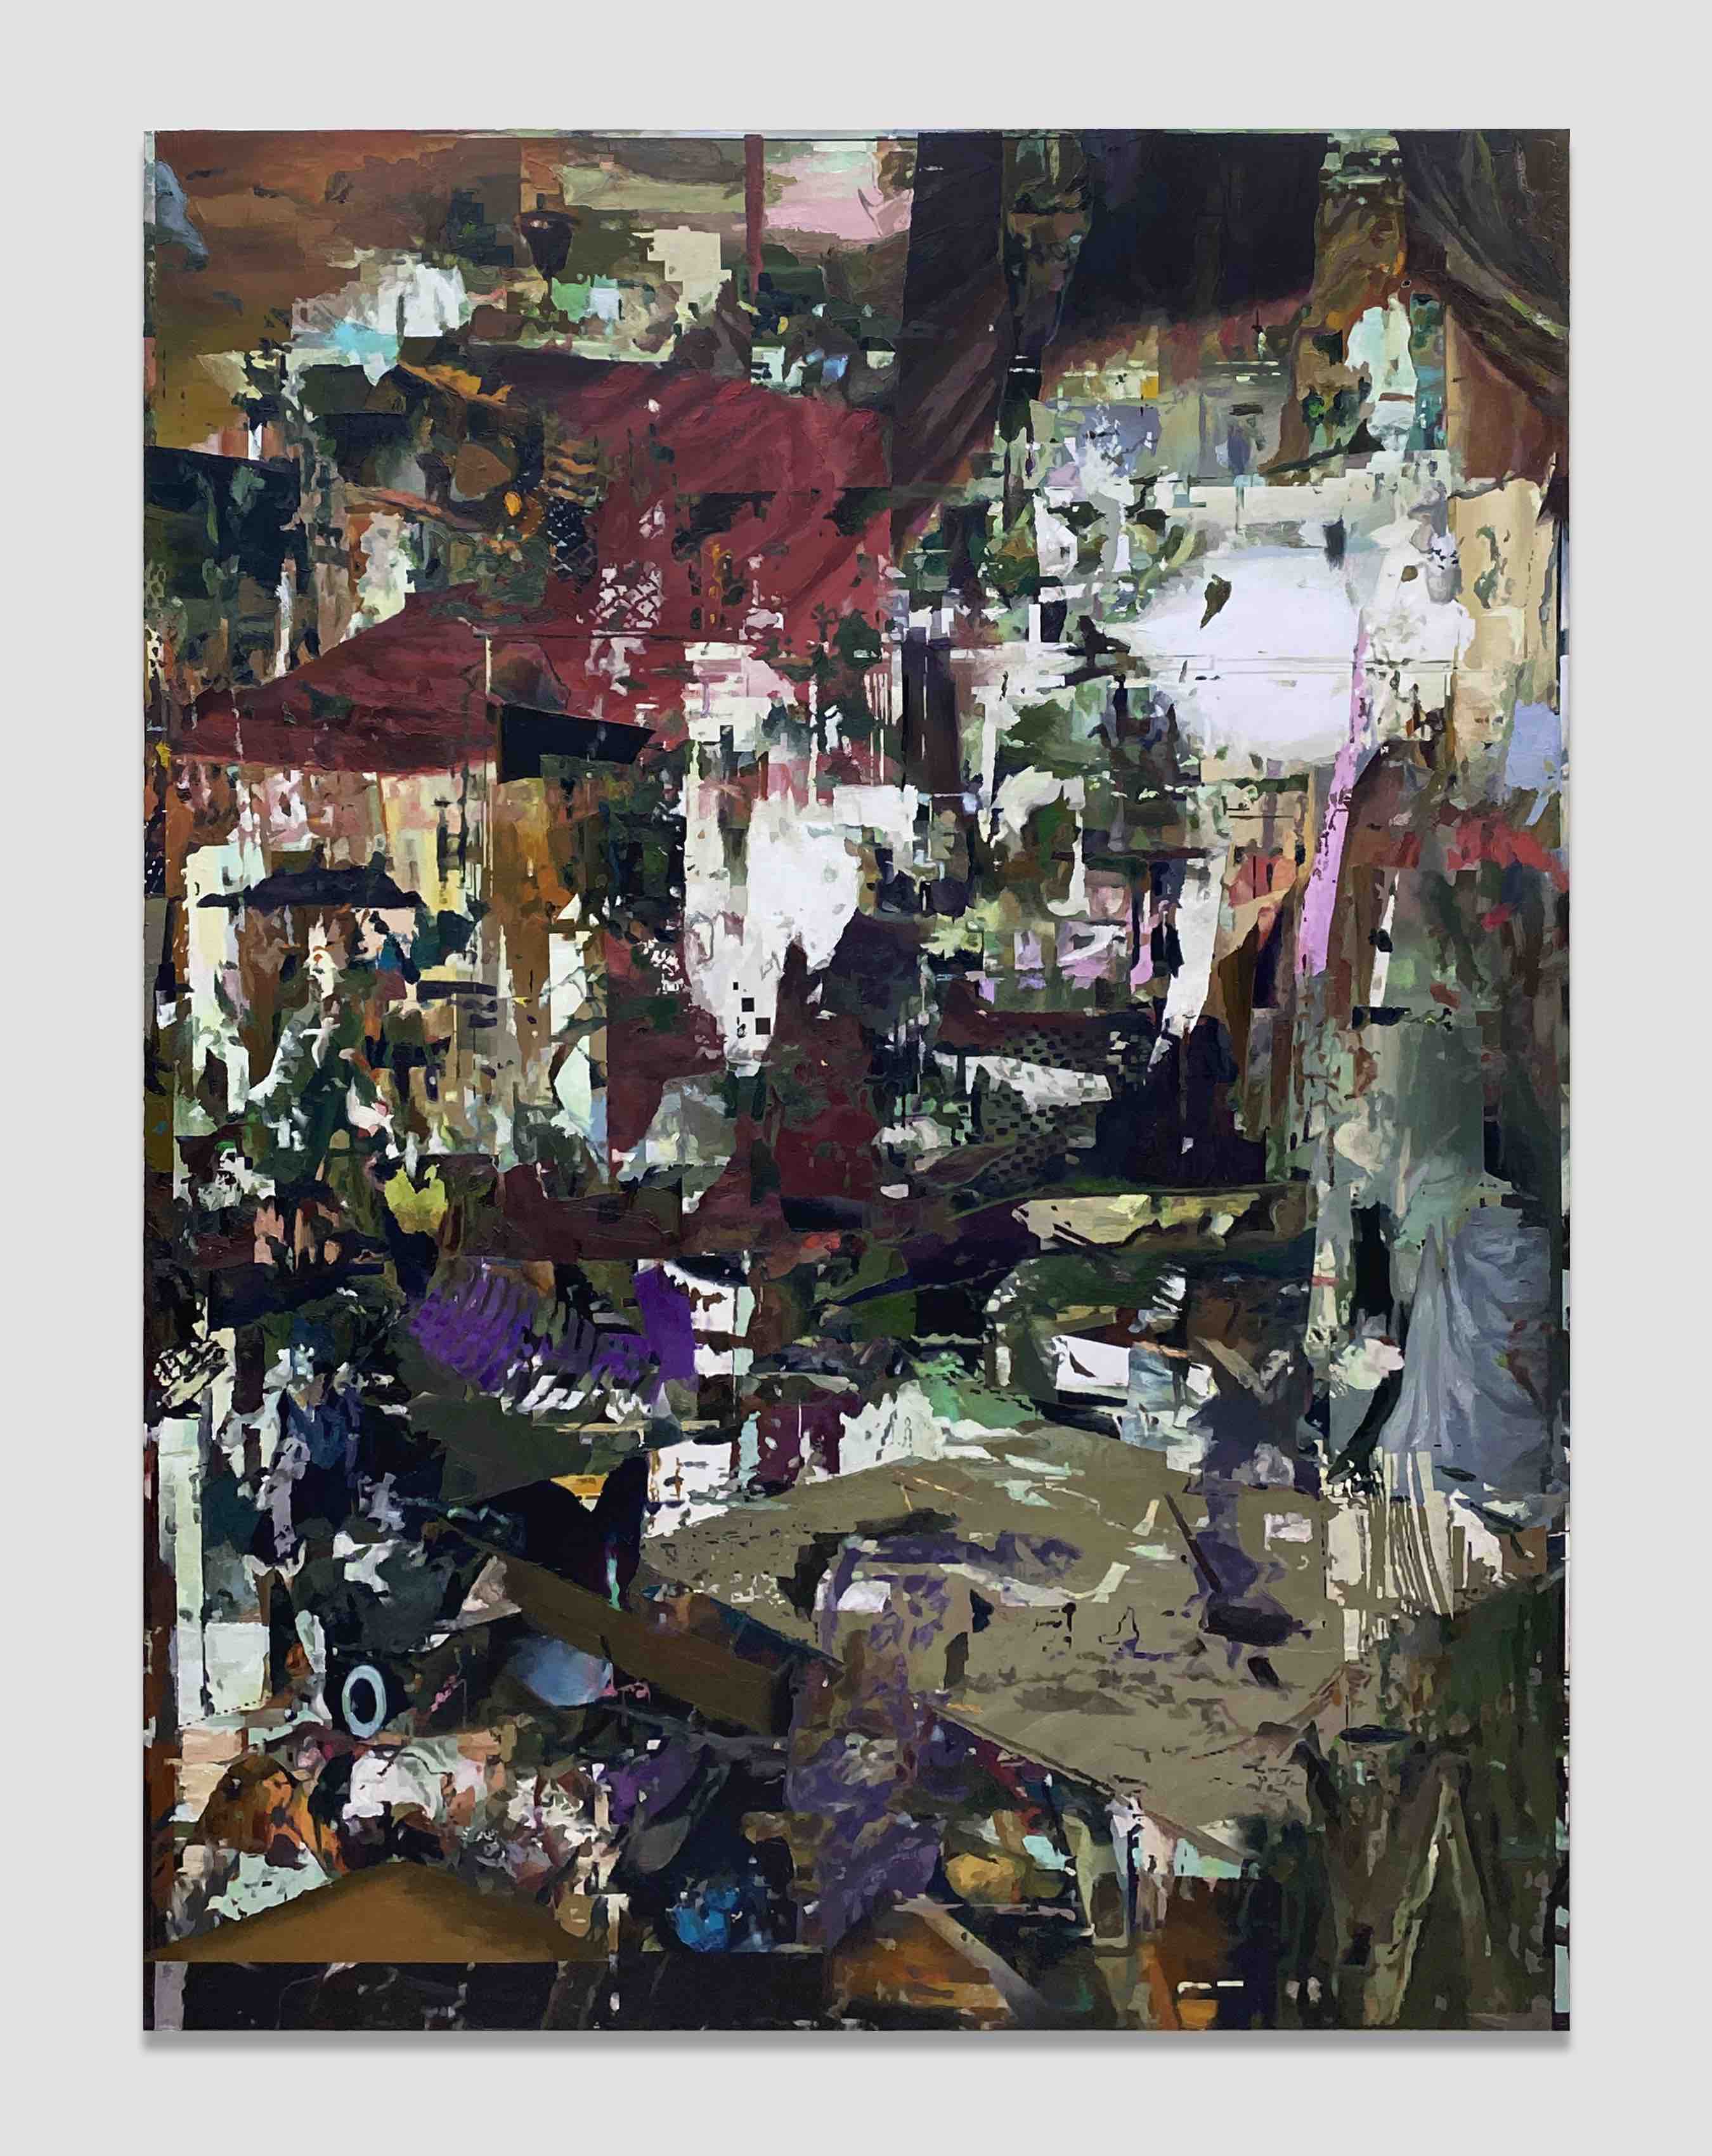 2021, oil on canvas, 200 x 150 cm